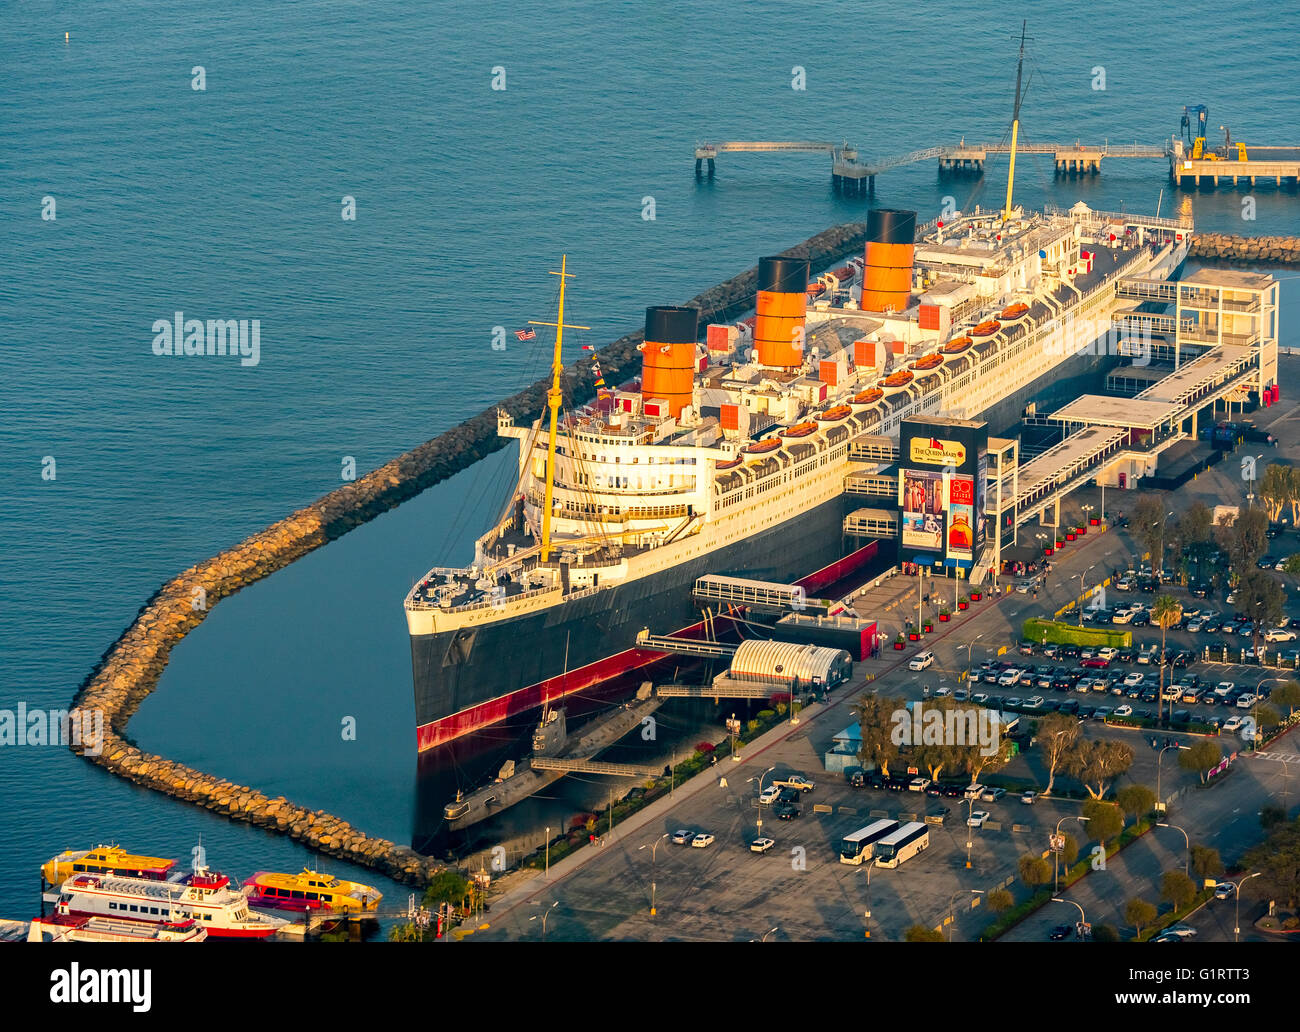 RMS Queen Mary Hotel Ocean Liner Queen Mary Hotel in Long Beach Harbor,  Long Beach, Los Angeles County, Kalifornien, USA Stockfotografie - Alamy